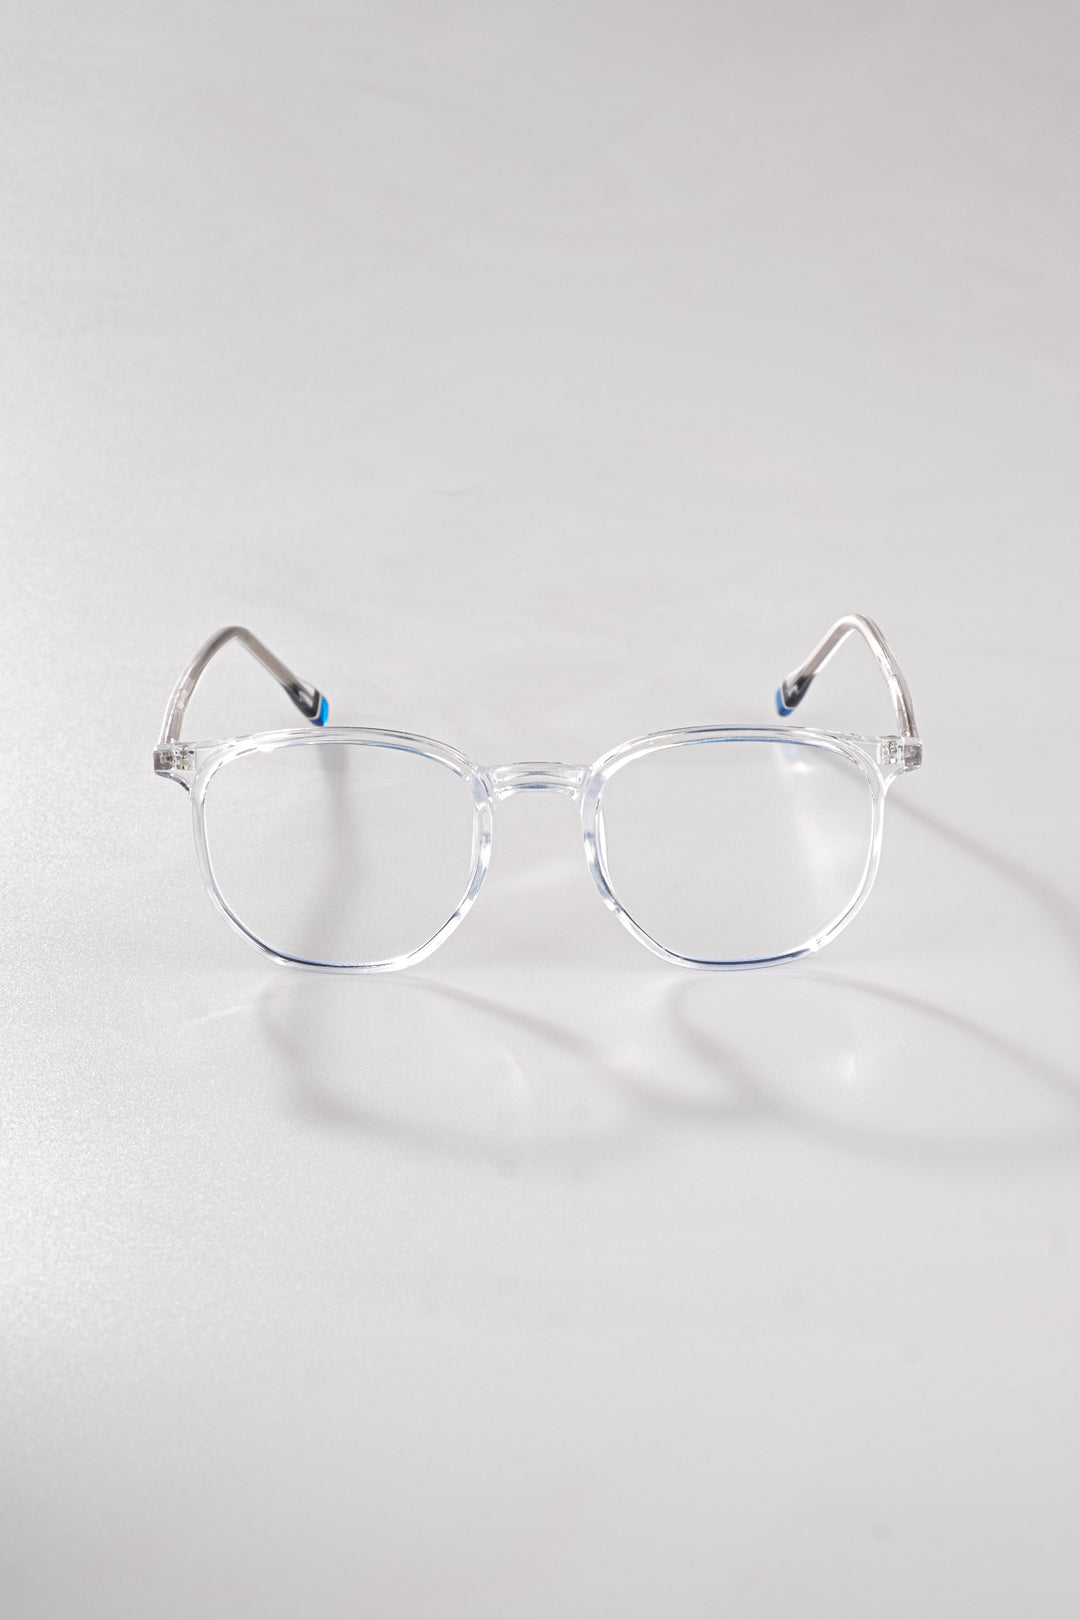 Matruj Blue Light Protection Glasses